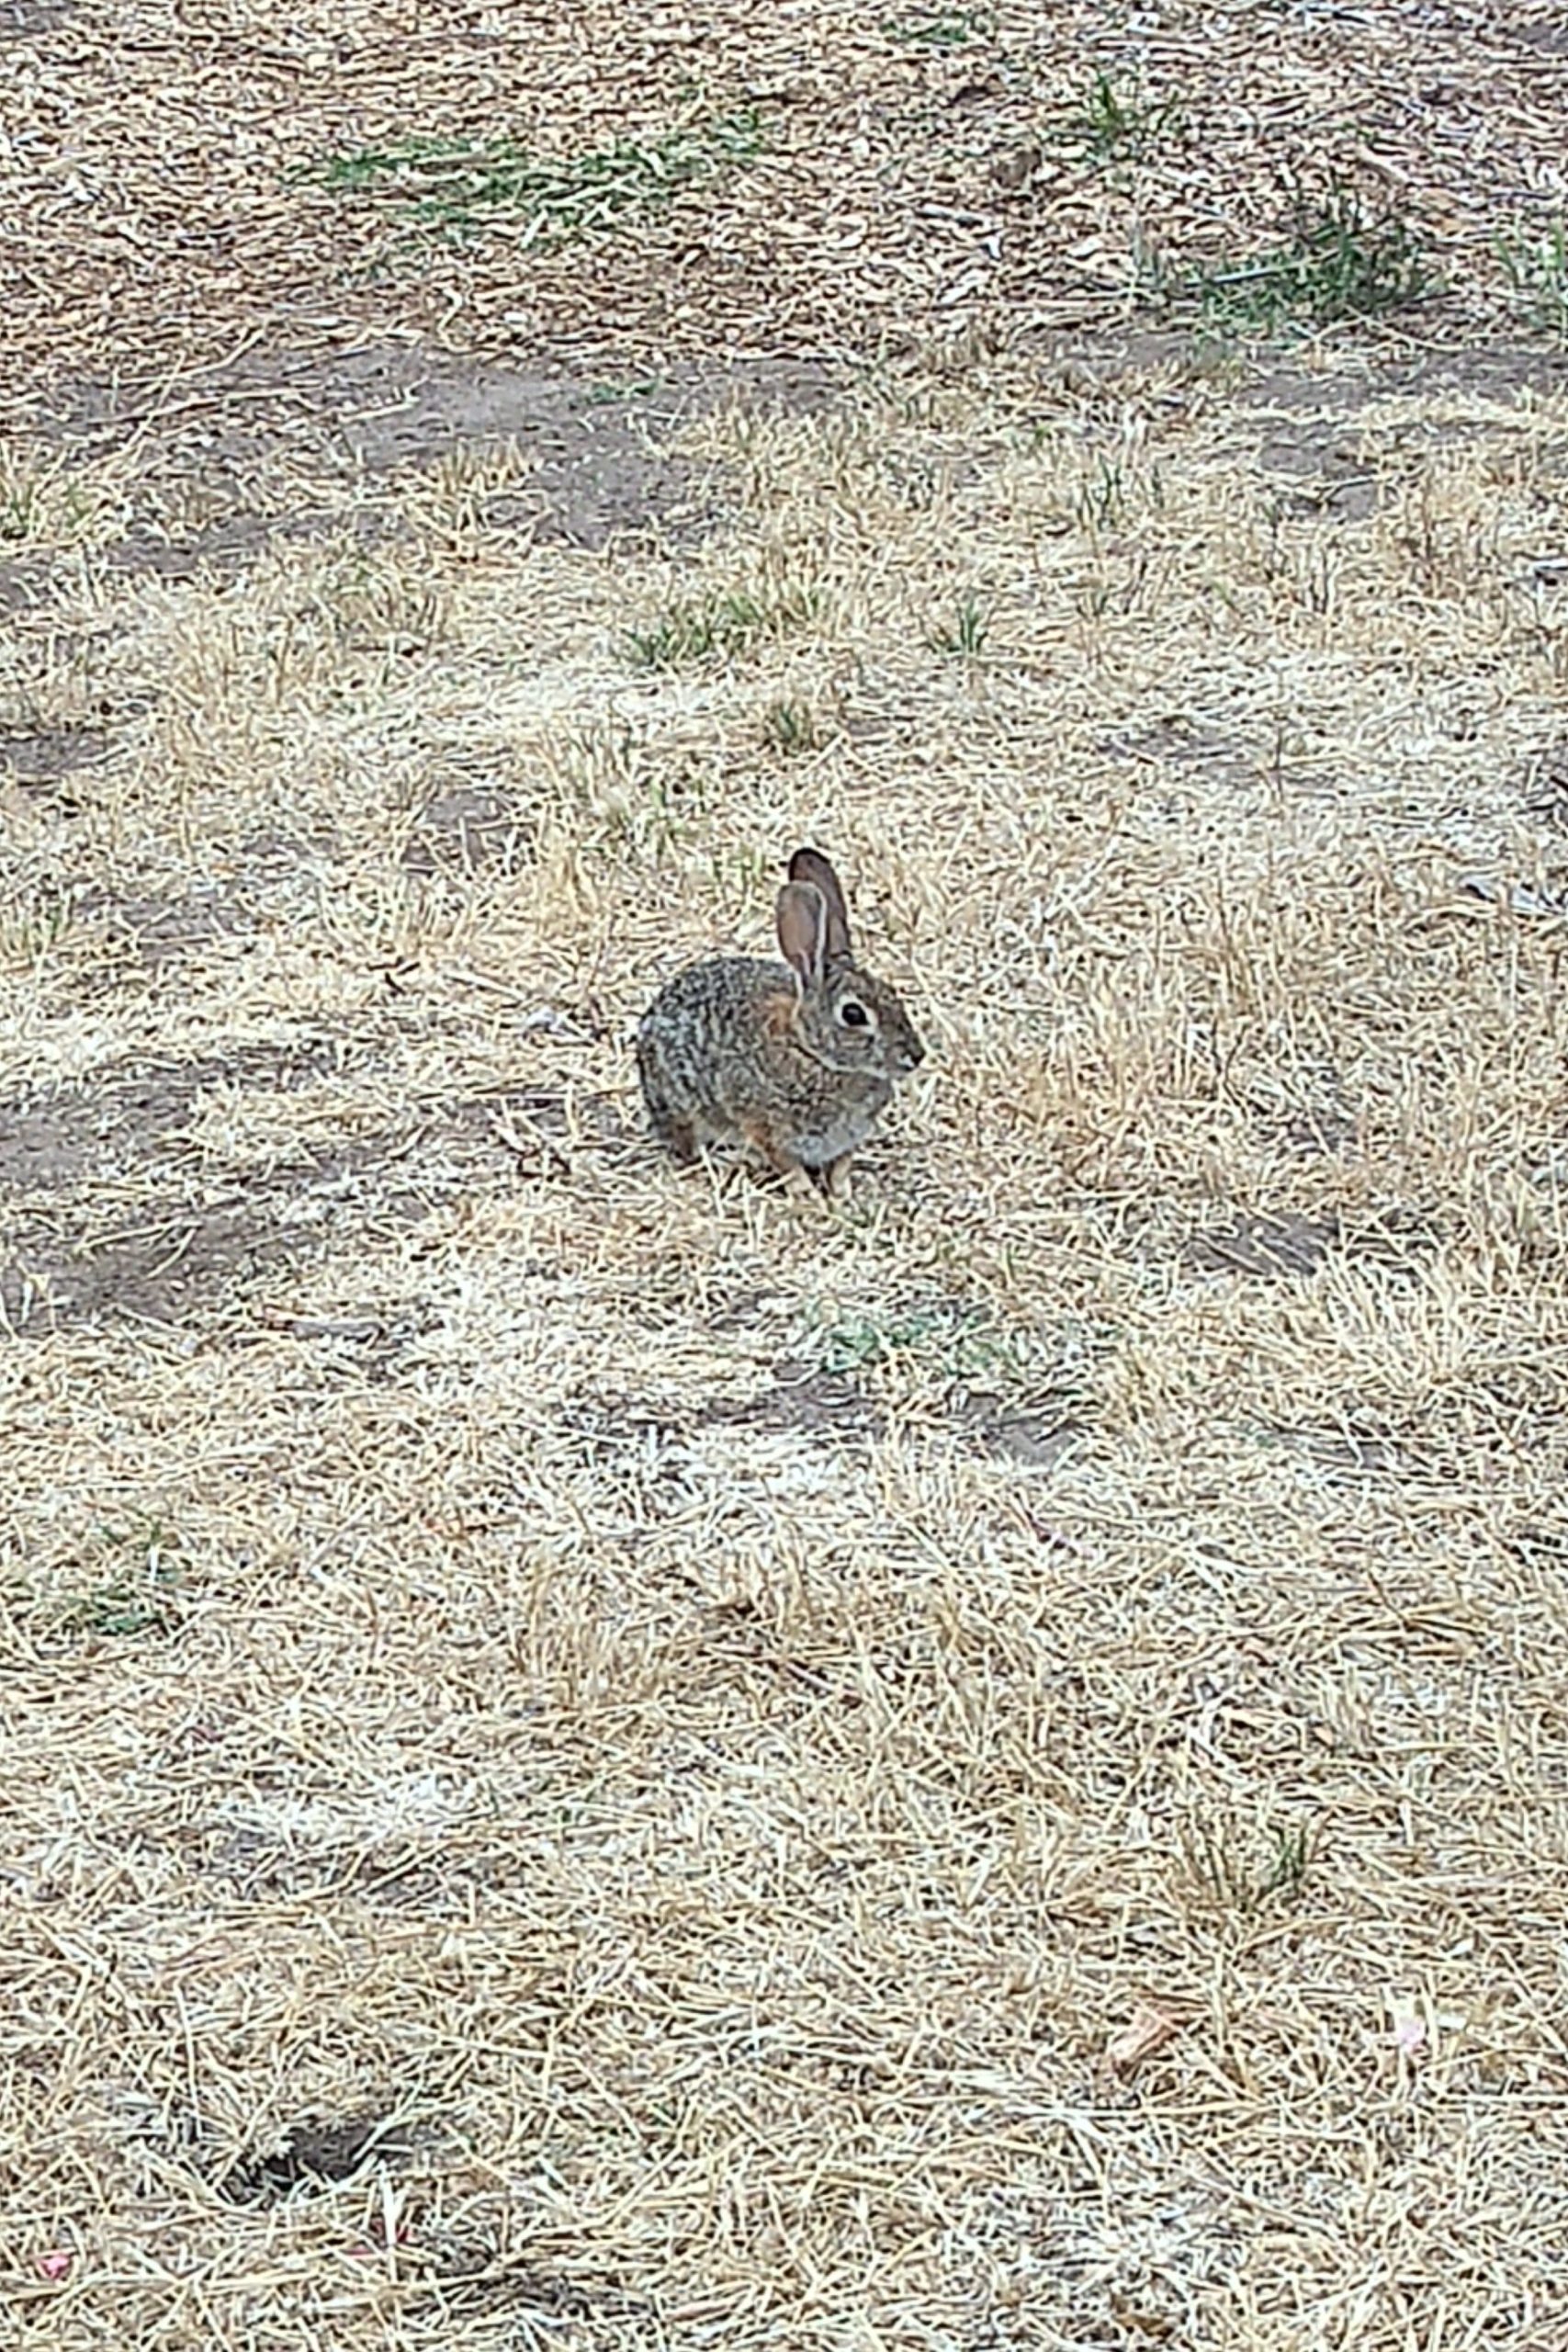 Rabbit at OVF